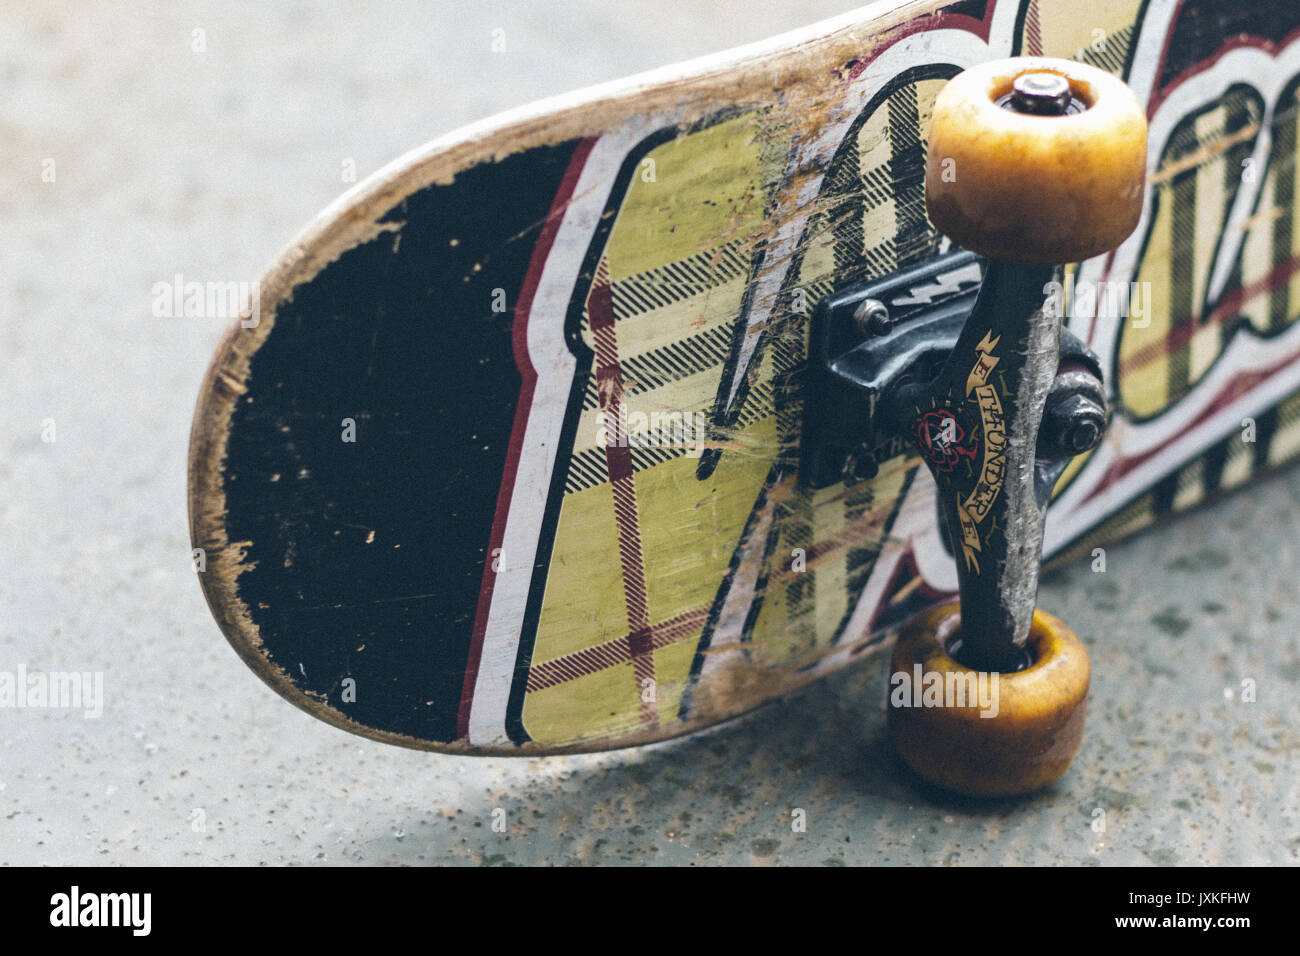 Rodney Mullen skateboard Fahren auf unebenem Boden Stockfotografie - Alamy